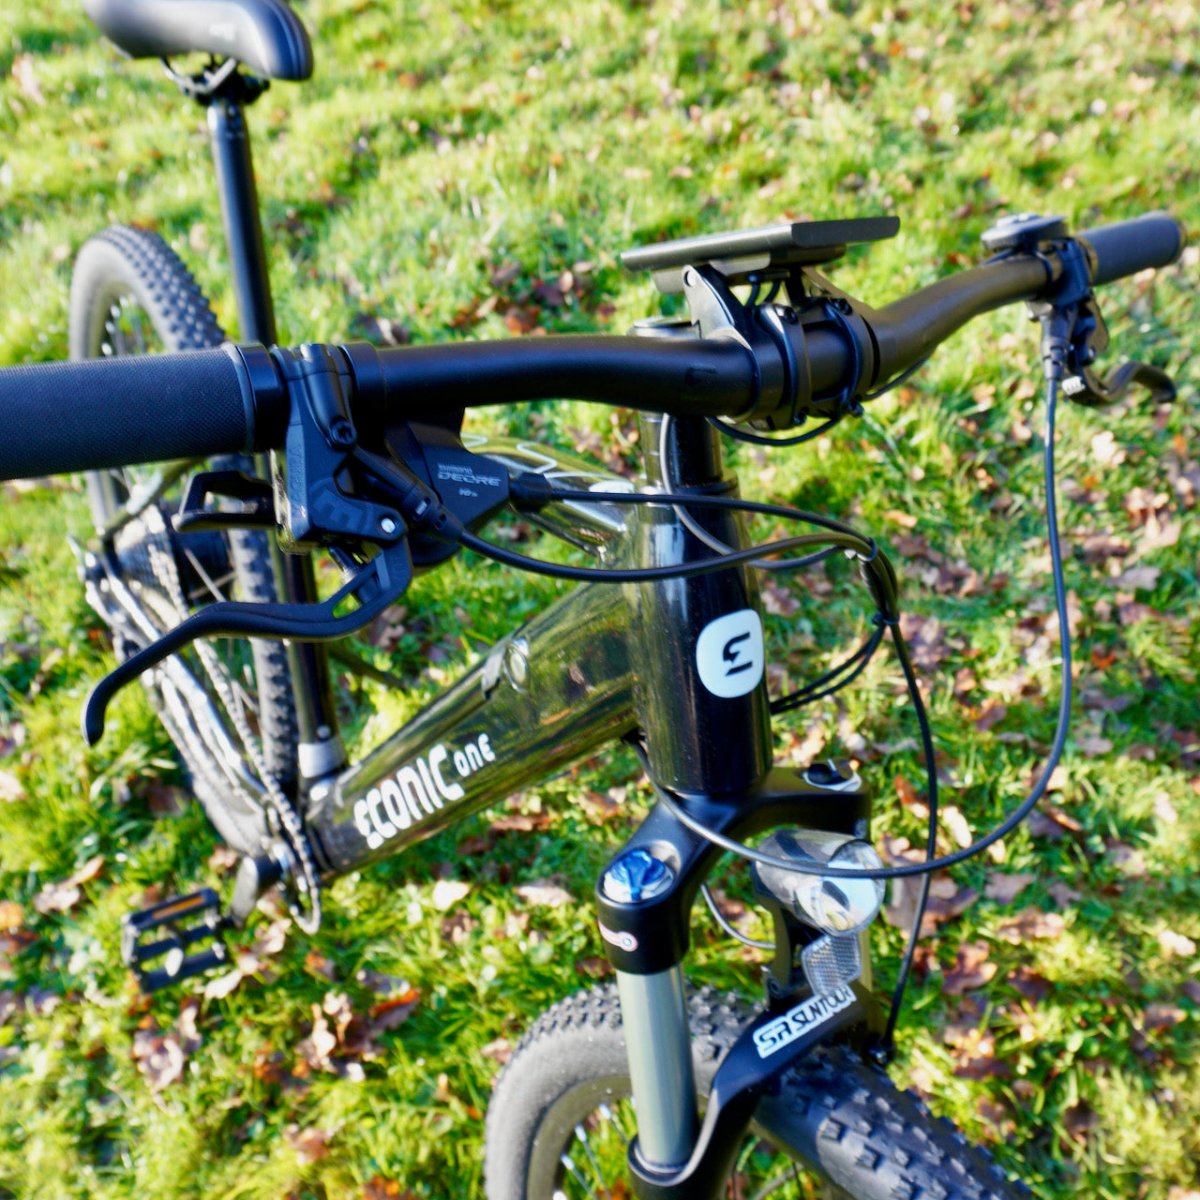 Electric mountain bike handlebars | Econic One Cross Country  | Horizon Micromobility